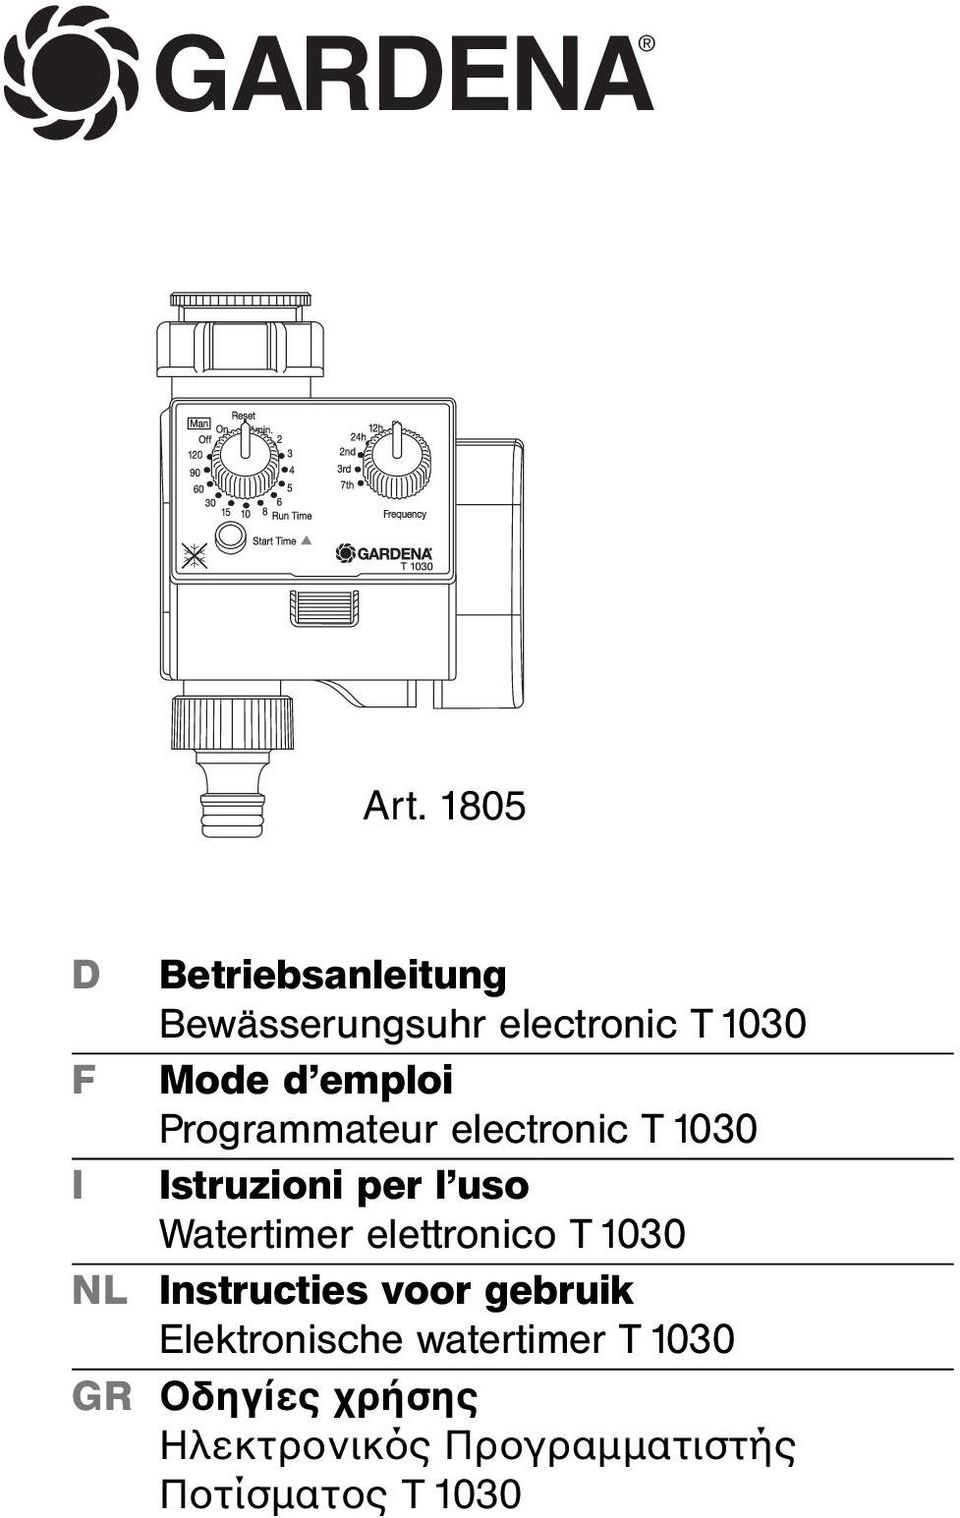 Programmateur electronic T 1030 I Istruzioni per l uso Watertimer